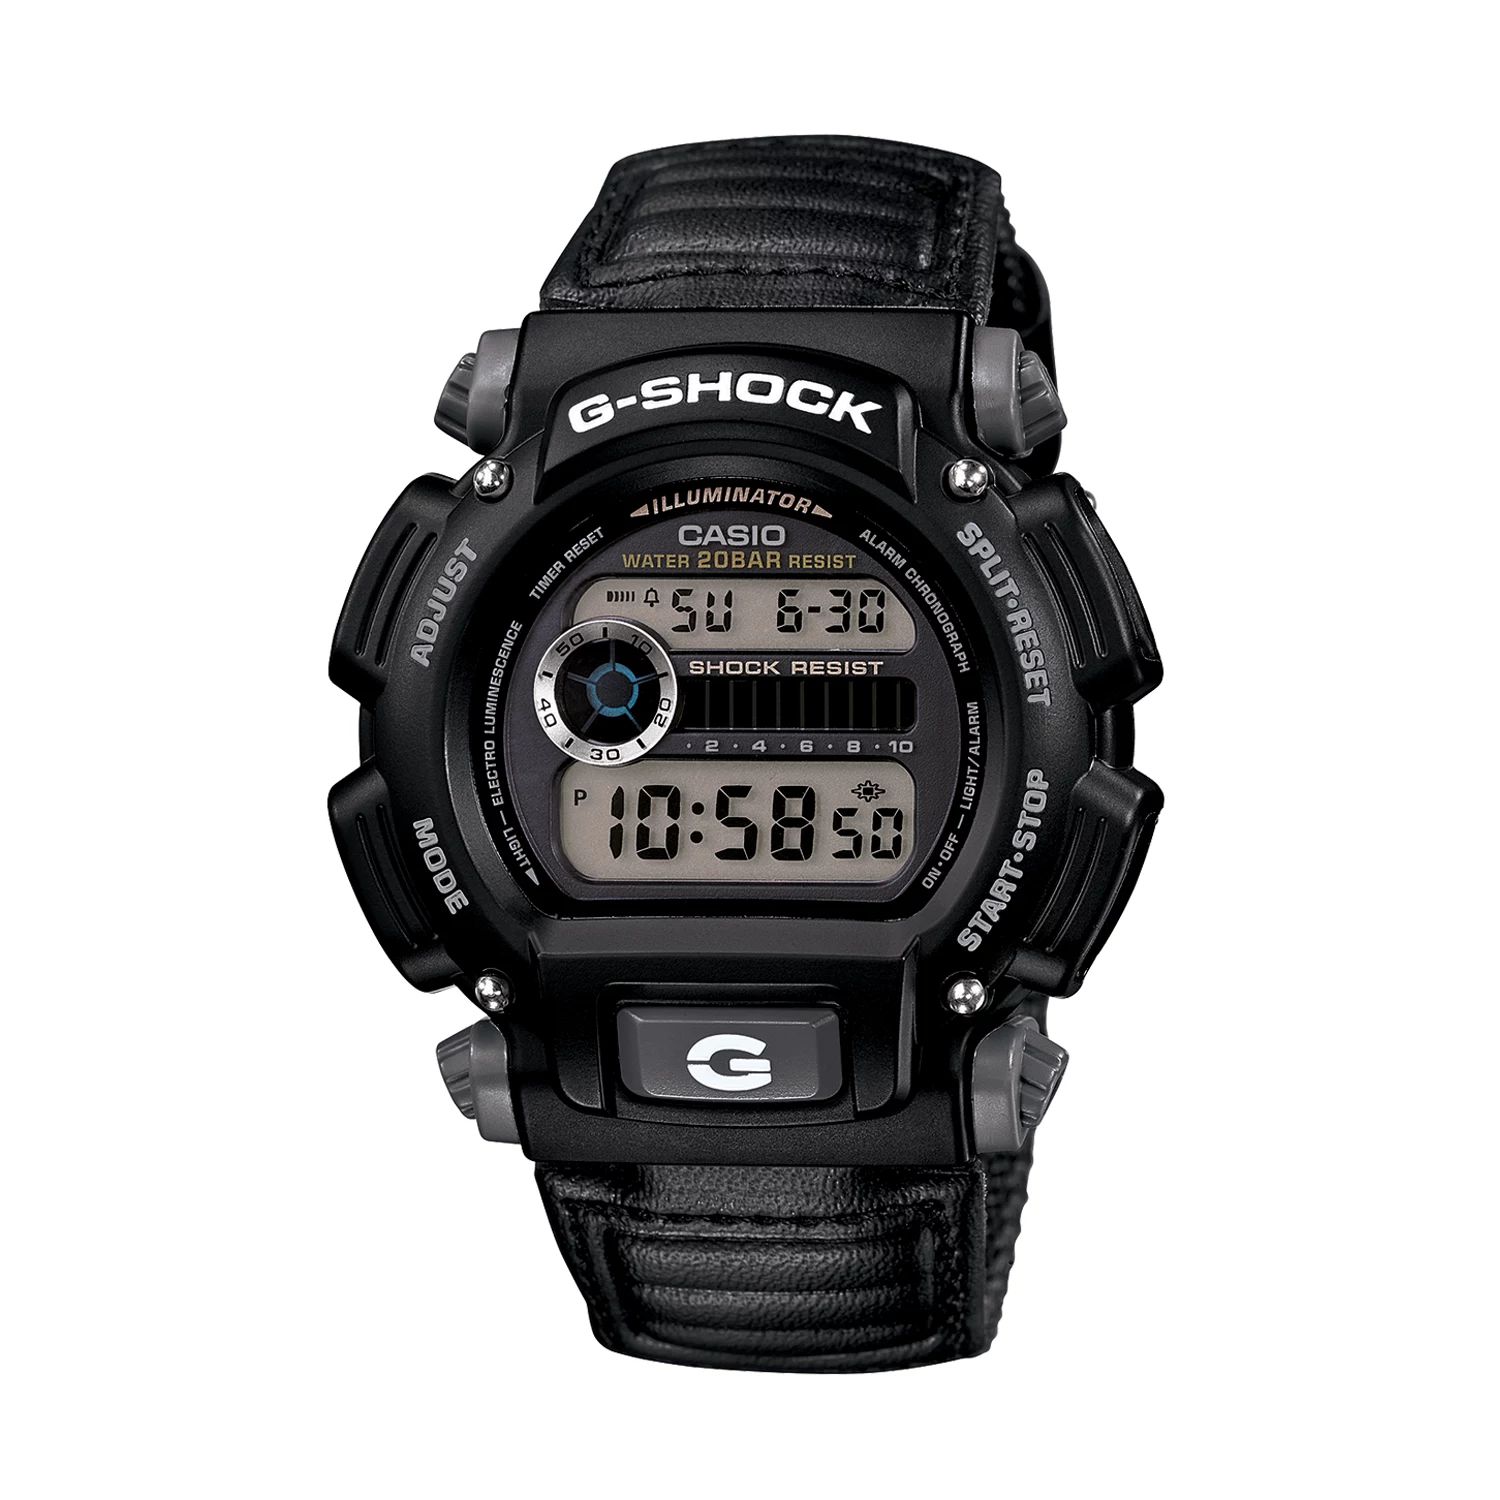 Мужские цифровые часы G-Shock — DW9052V-1 Casio цена и фото